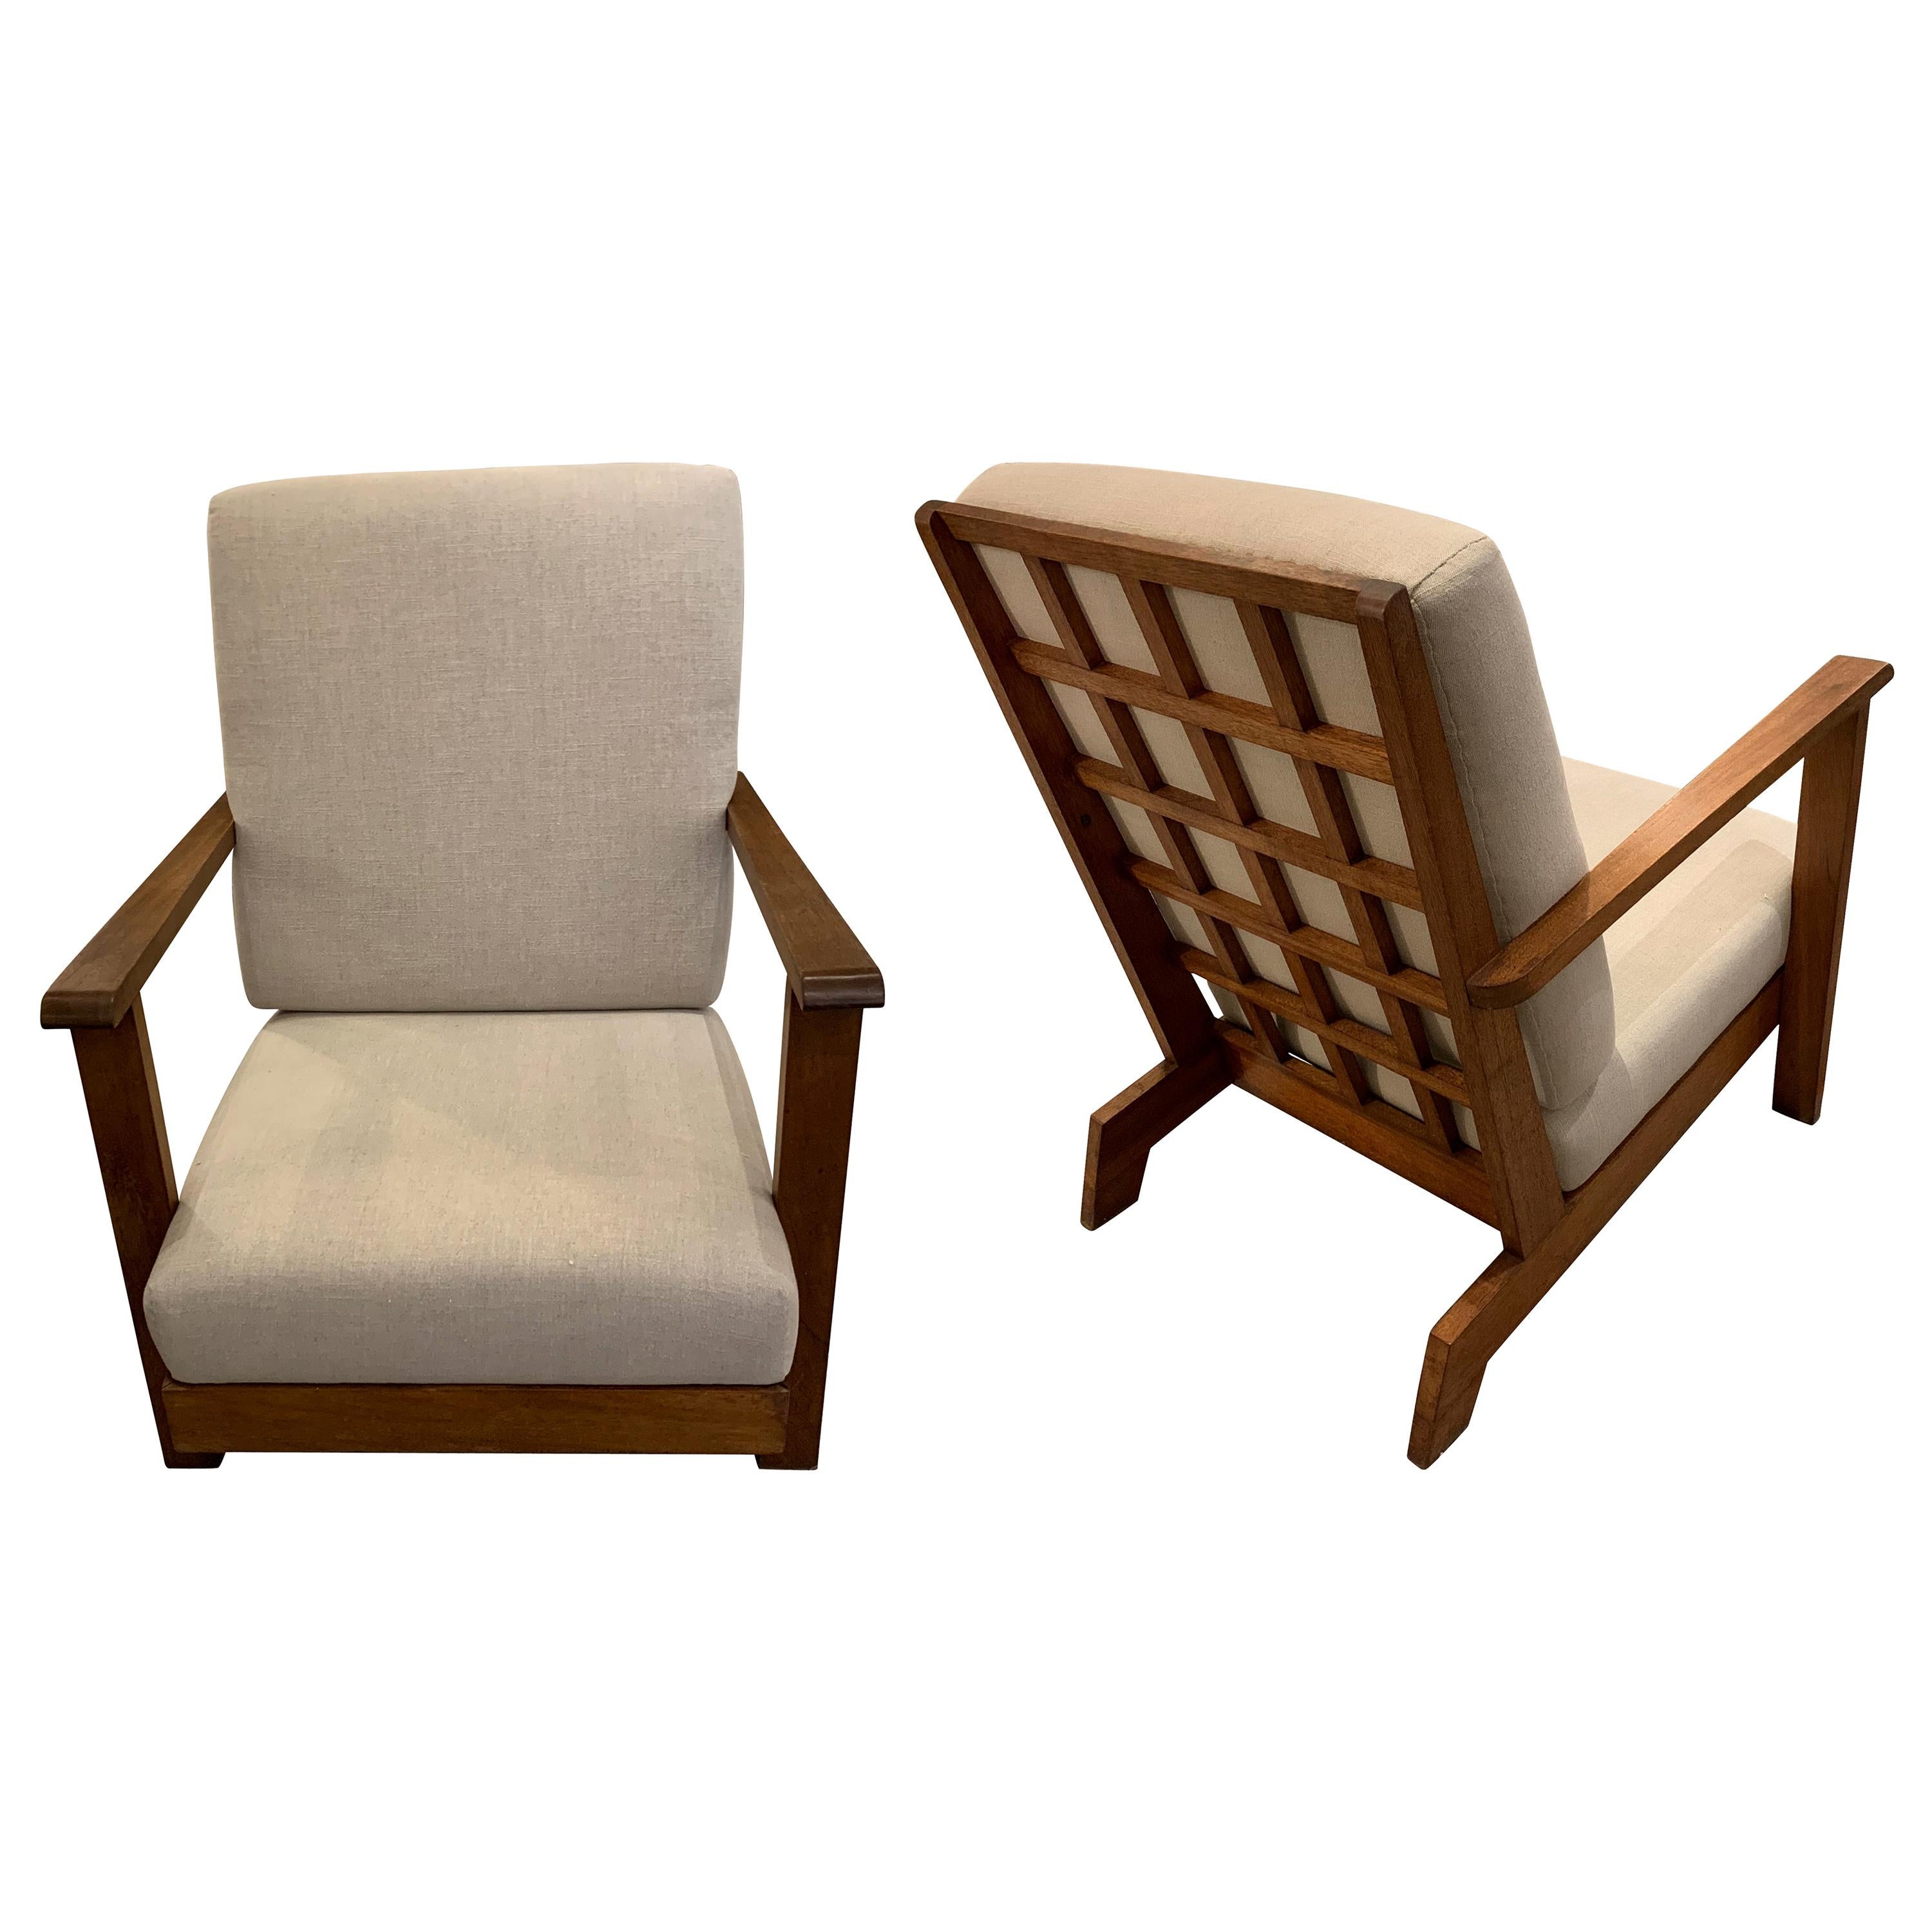 Pair of Renee Gabriel Club Chairs, France, 1950s